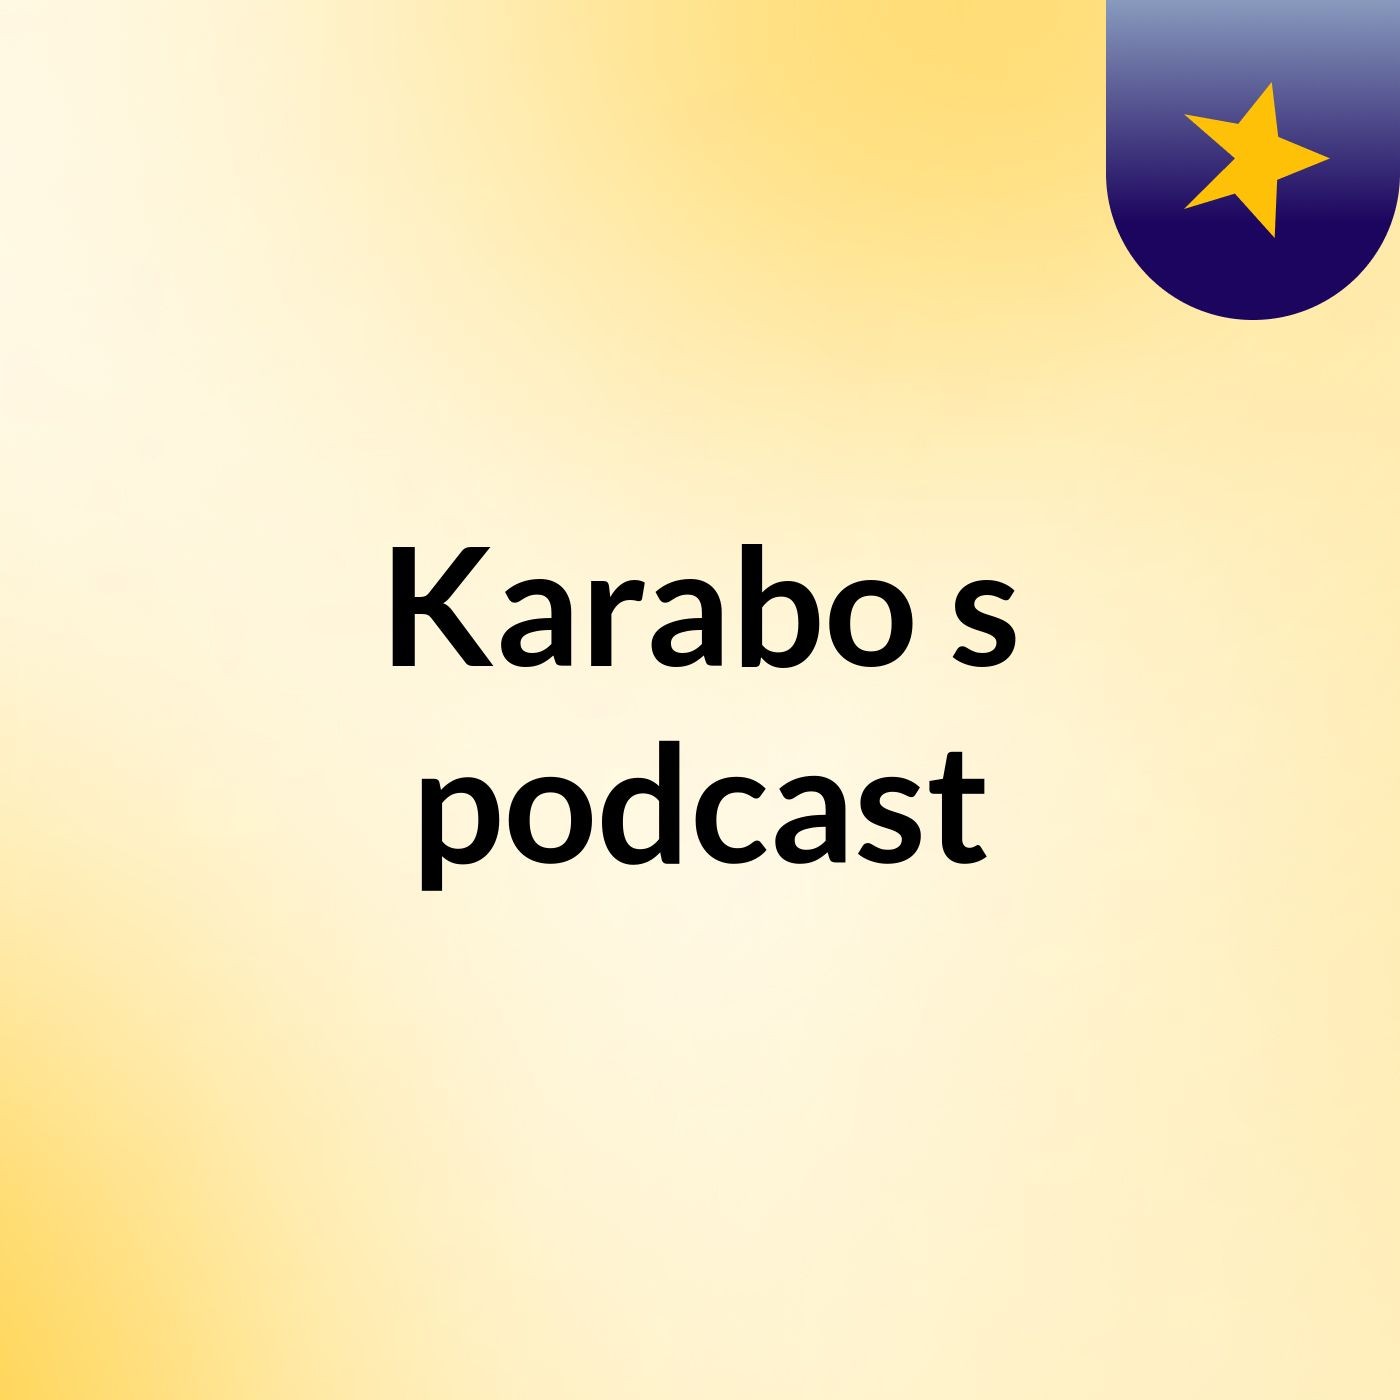 Karabo's podcast